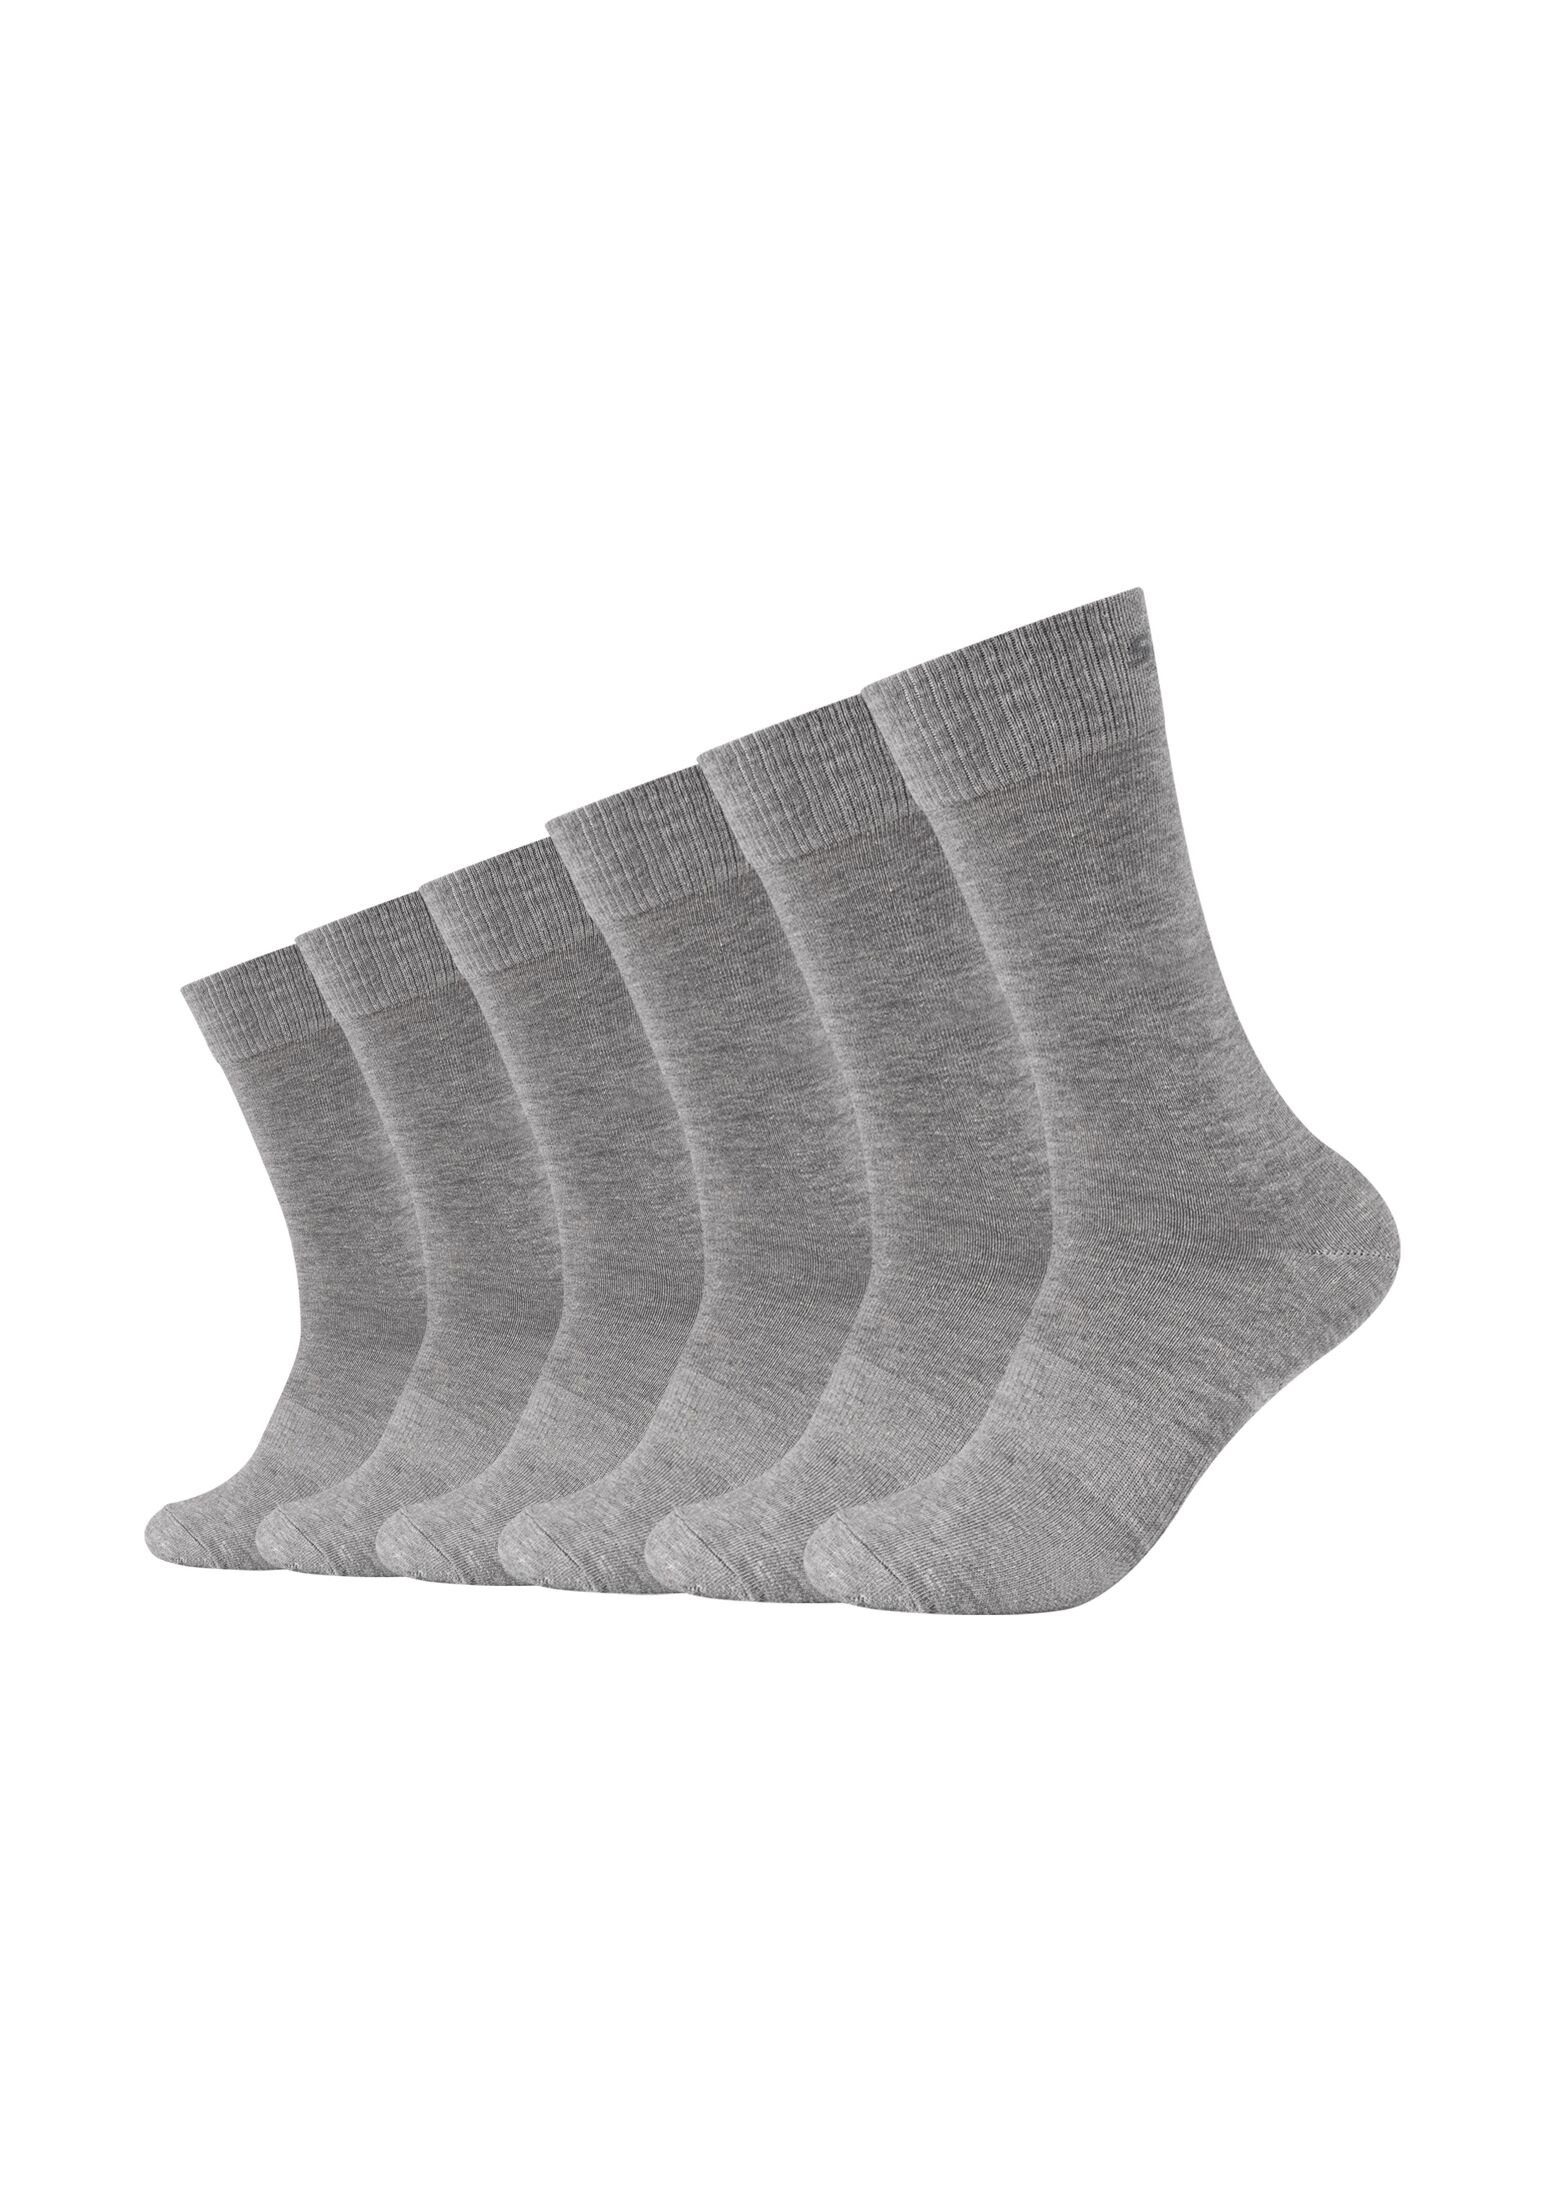 Billiges Originalprodukt Skechers Socken Socken 6er Pack grey melange light